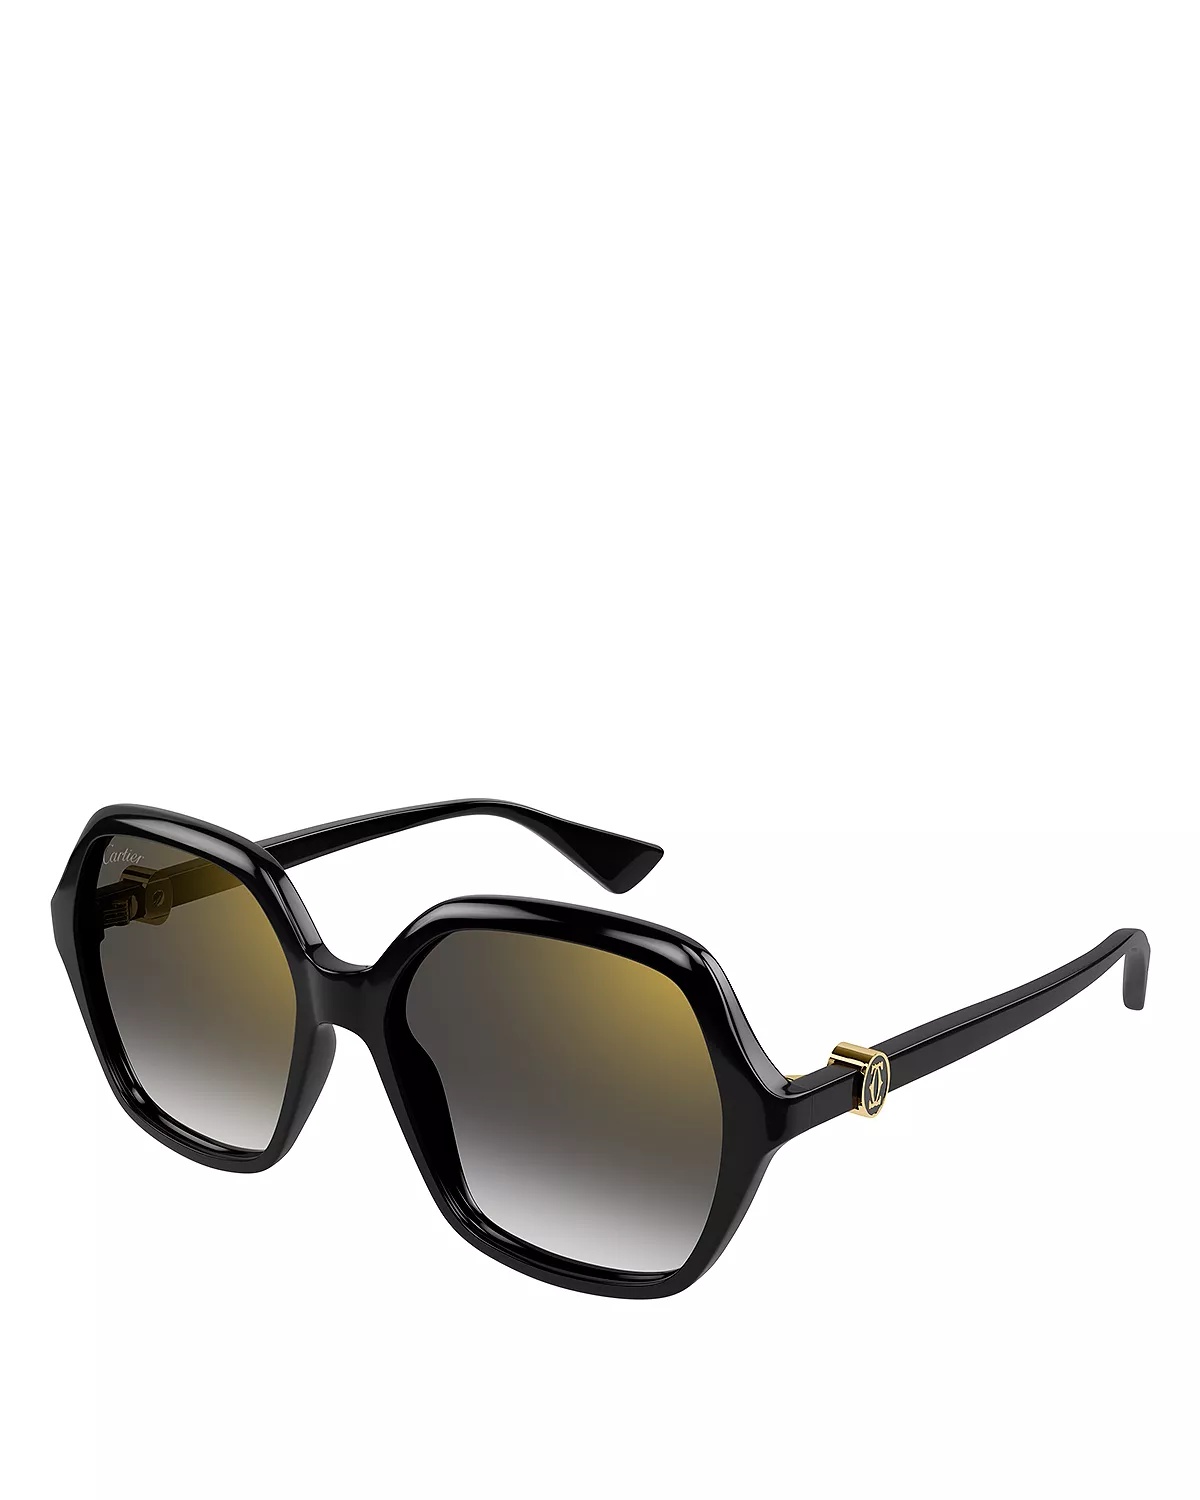 Double C Squared Sunglasses, 57mm - 1